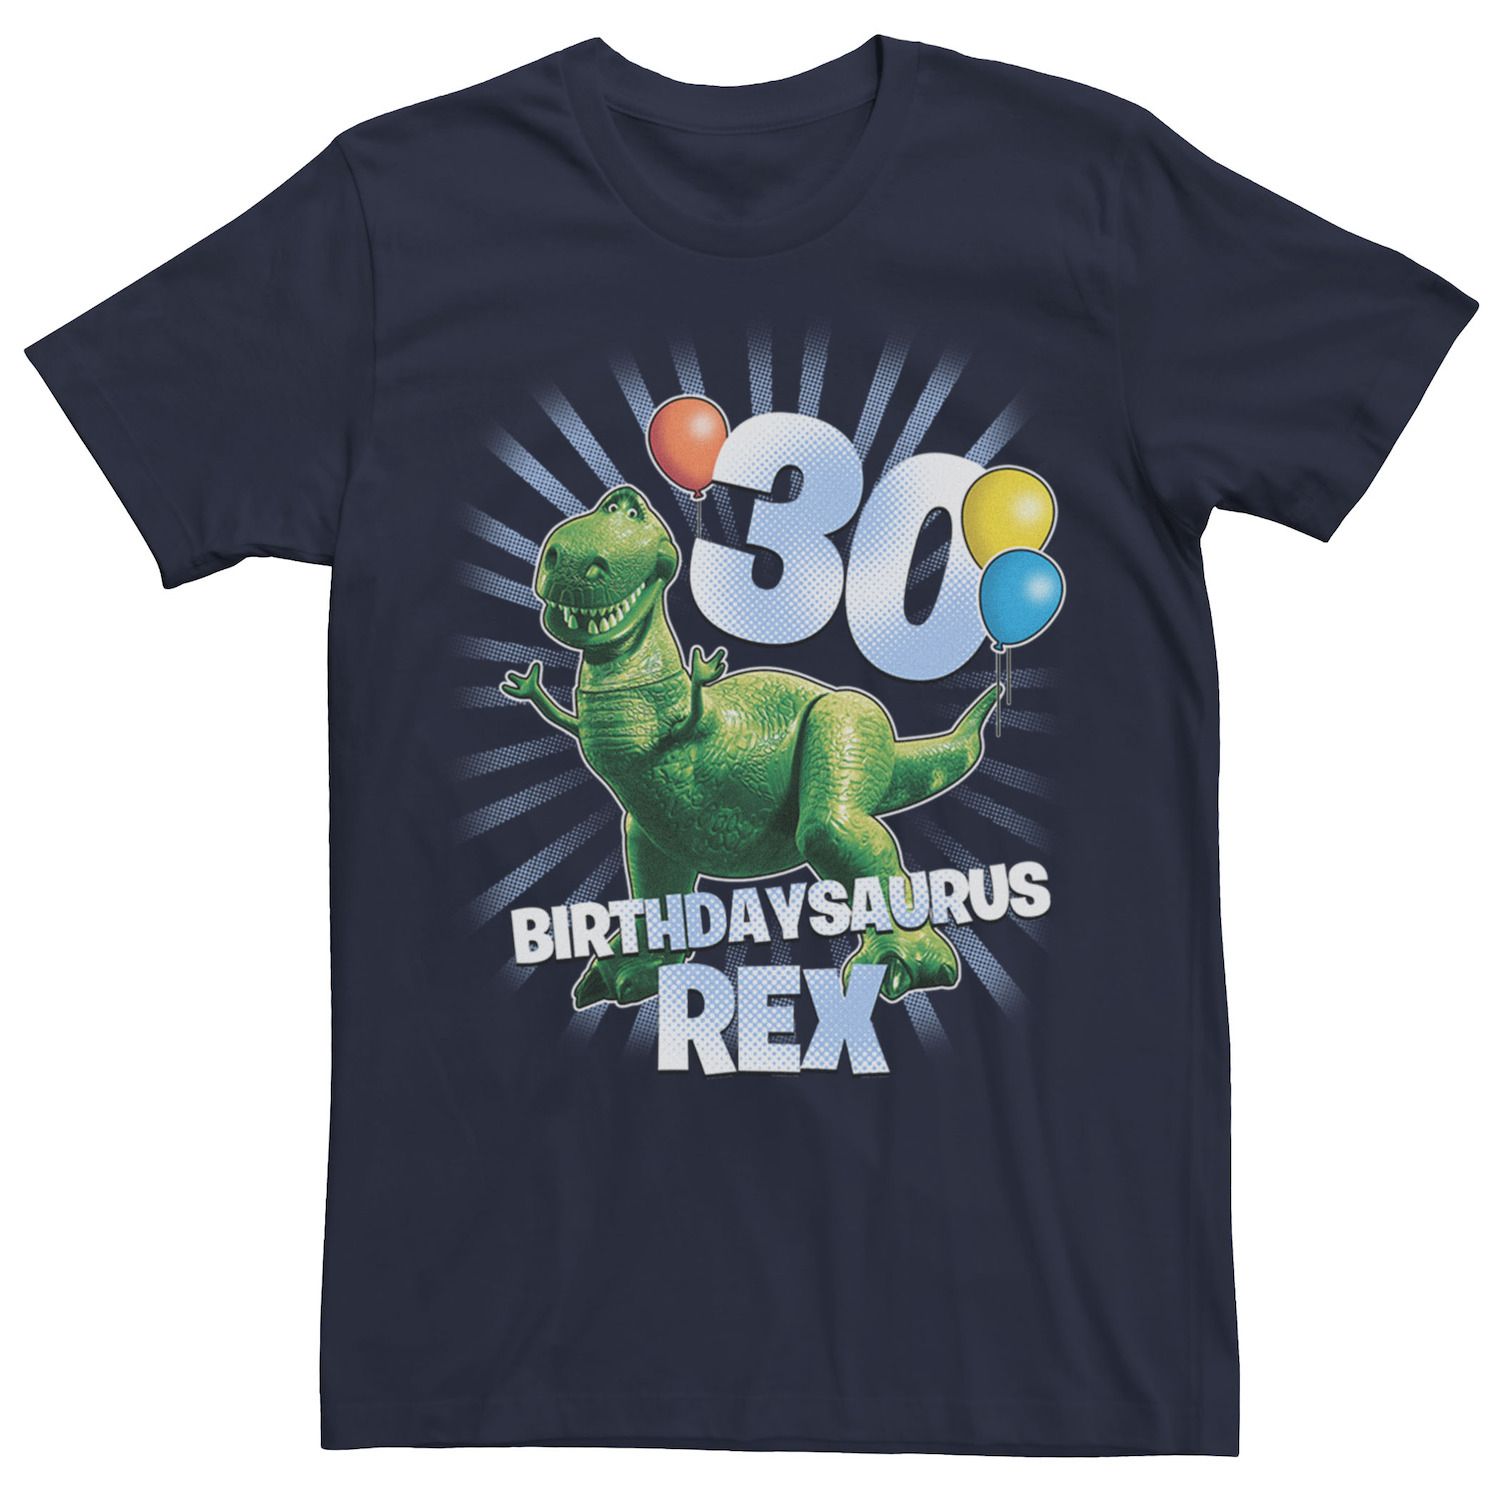 мужская футболка disney pixar toy story rex face licensed character Мужская футболка Disney/Pixar Toy Story Birthdaysaurus Rex на 30-летие Disney / Pixar